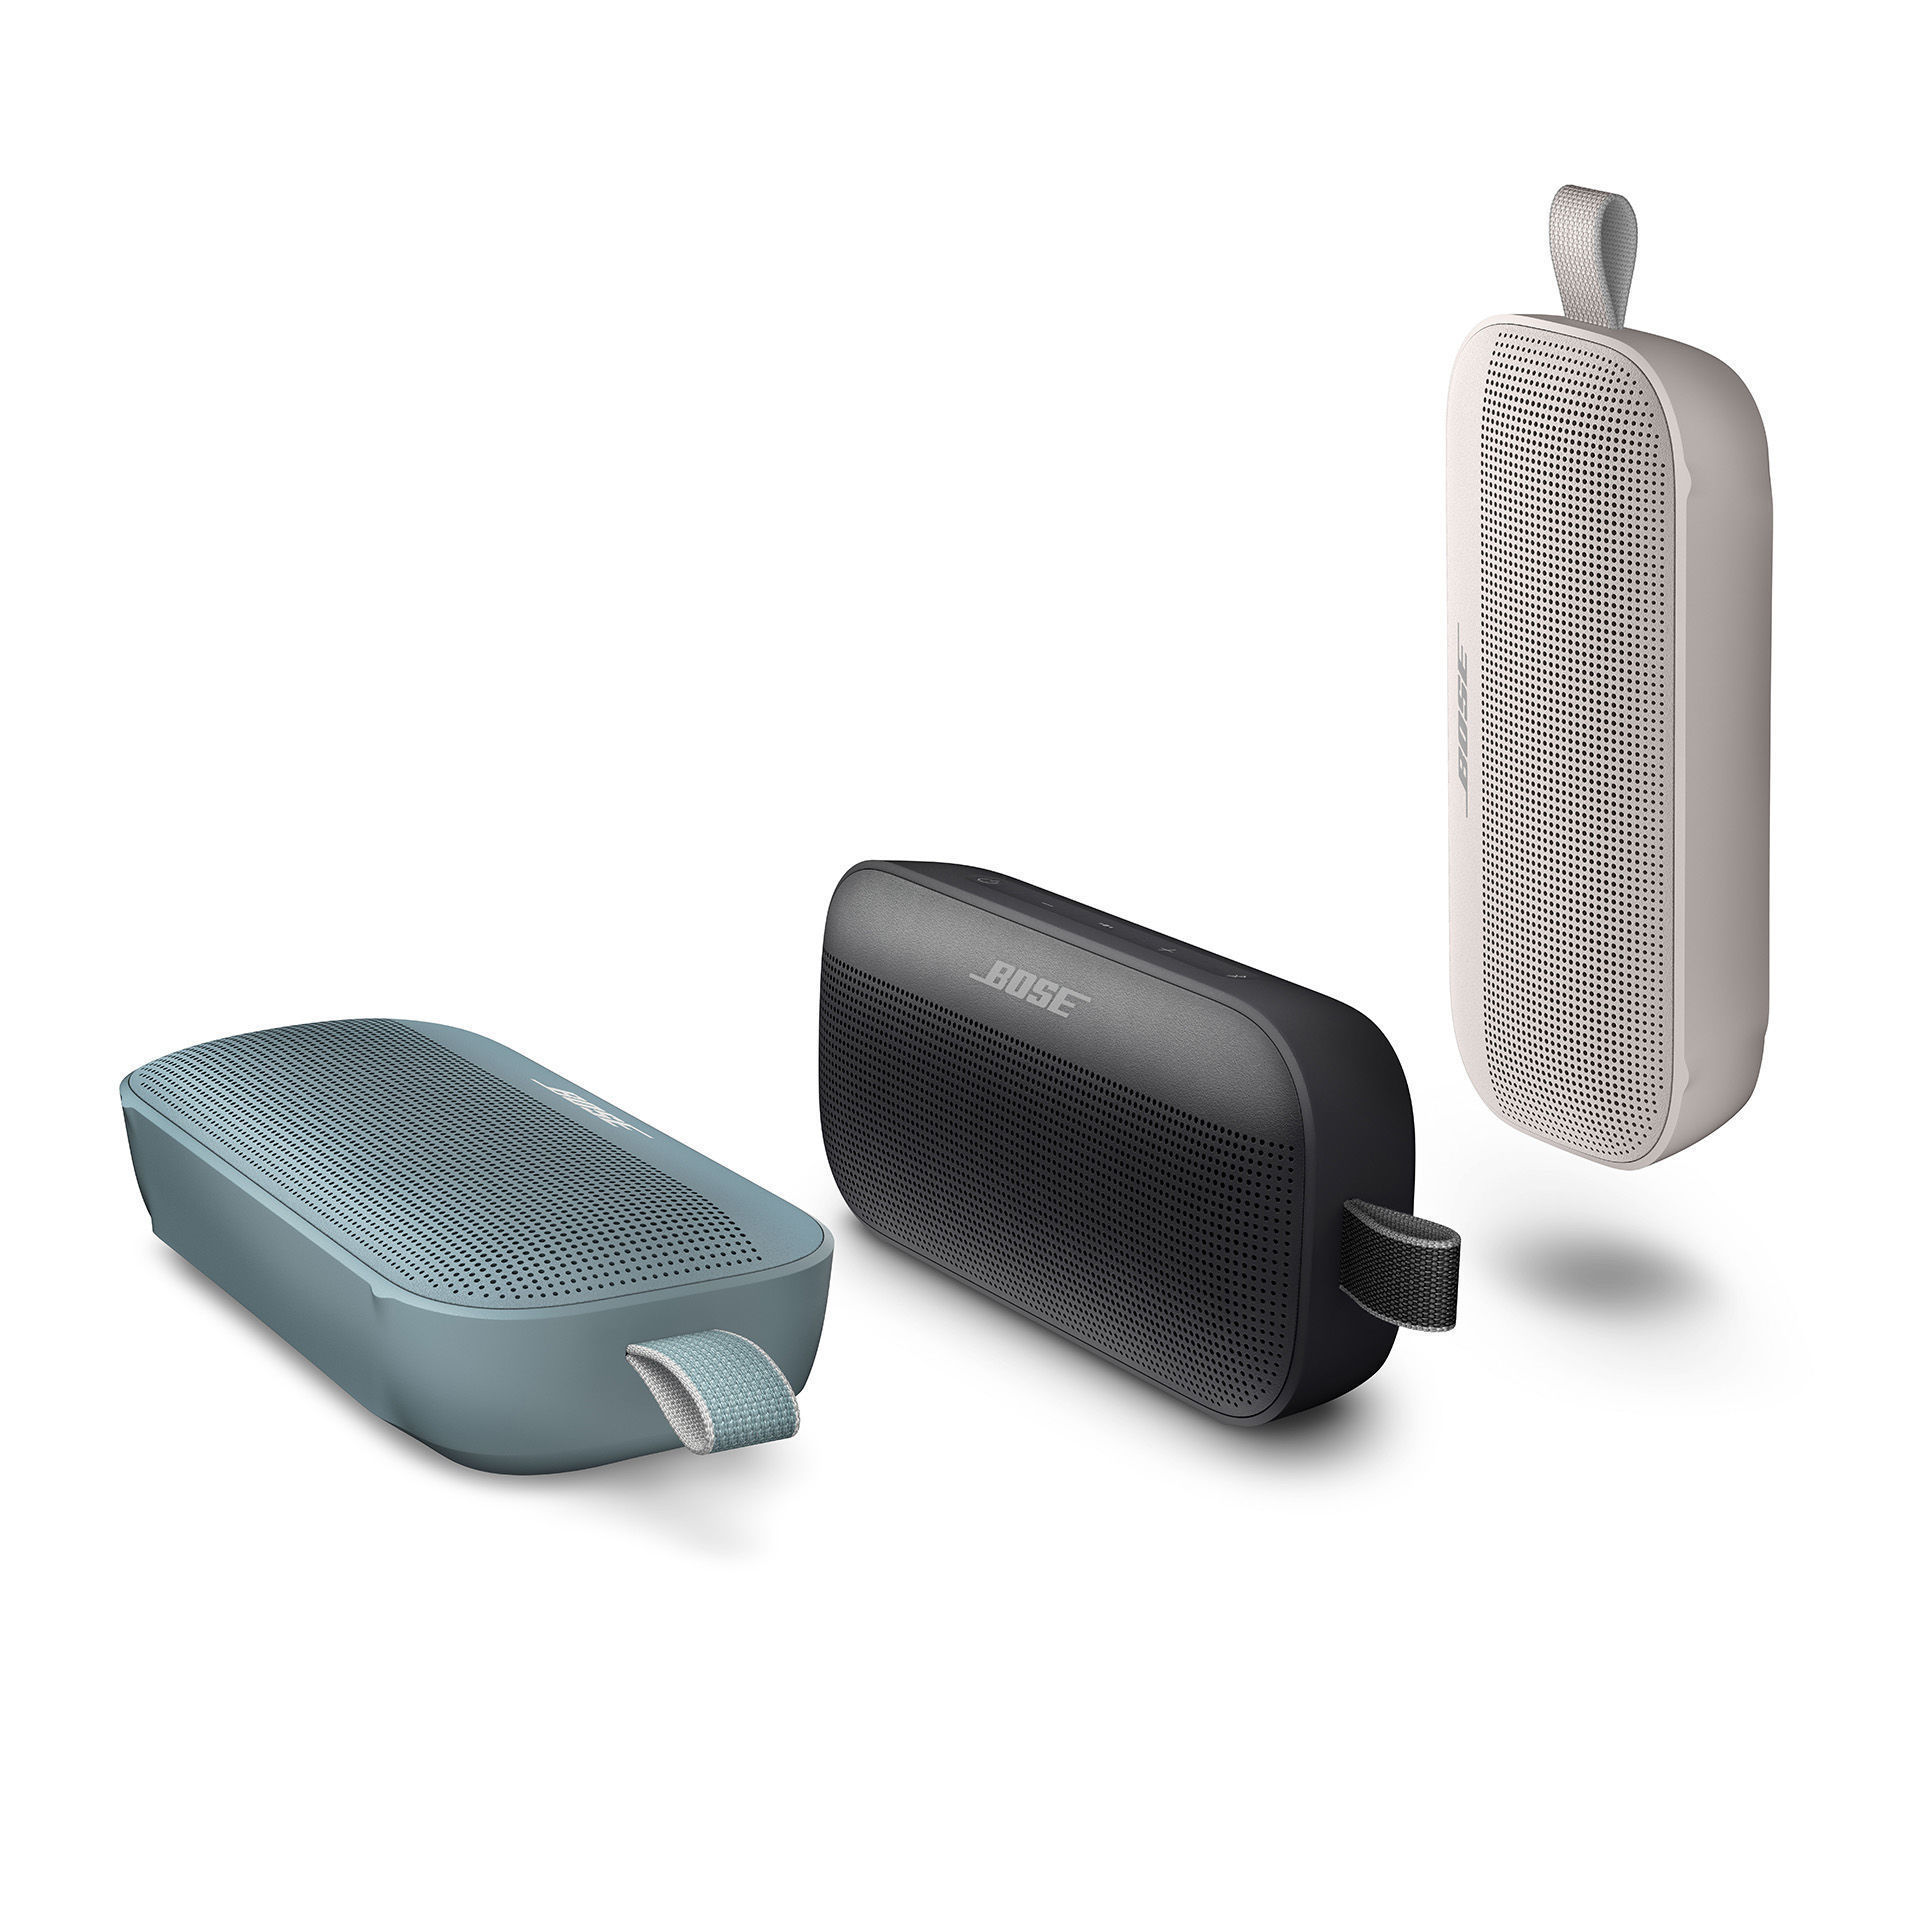 link|坚固、便携、防水的 Bose SoundLink Flex 蓝牙扬声器登场，要价 1399 元